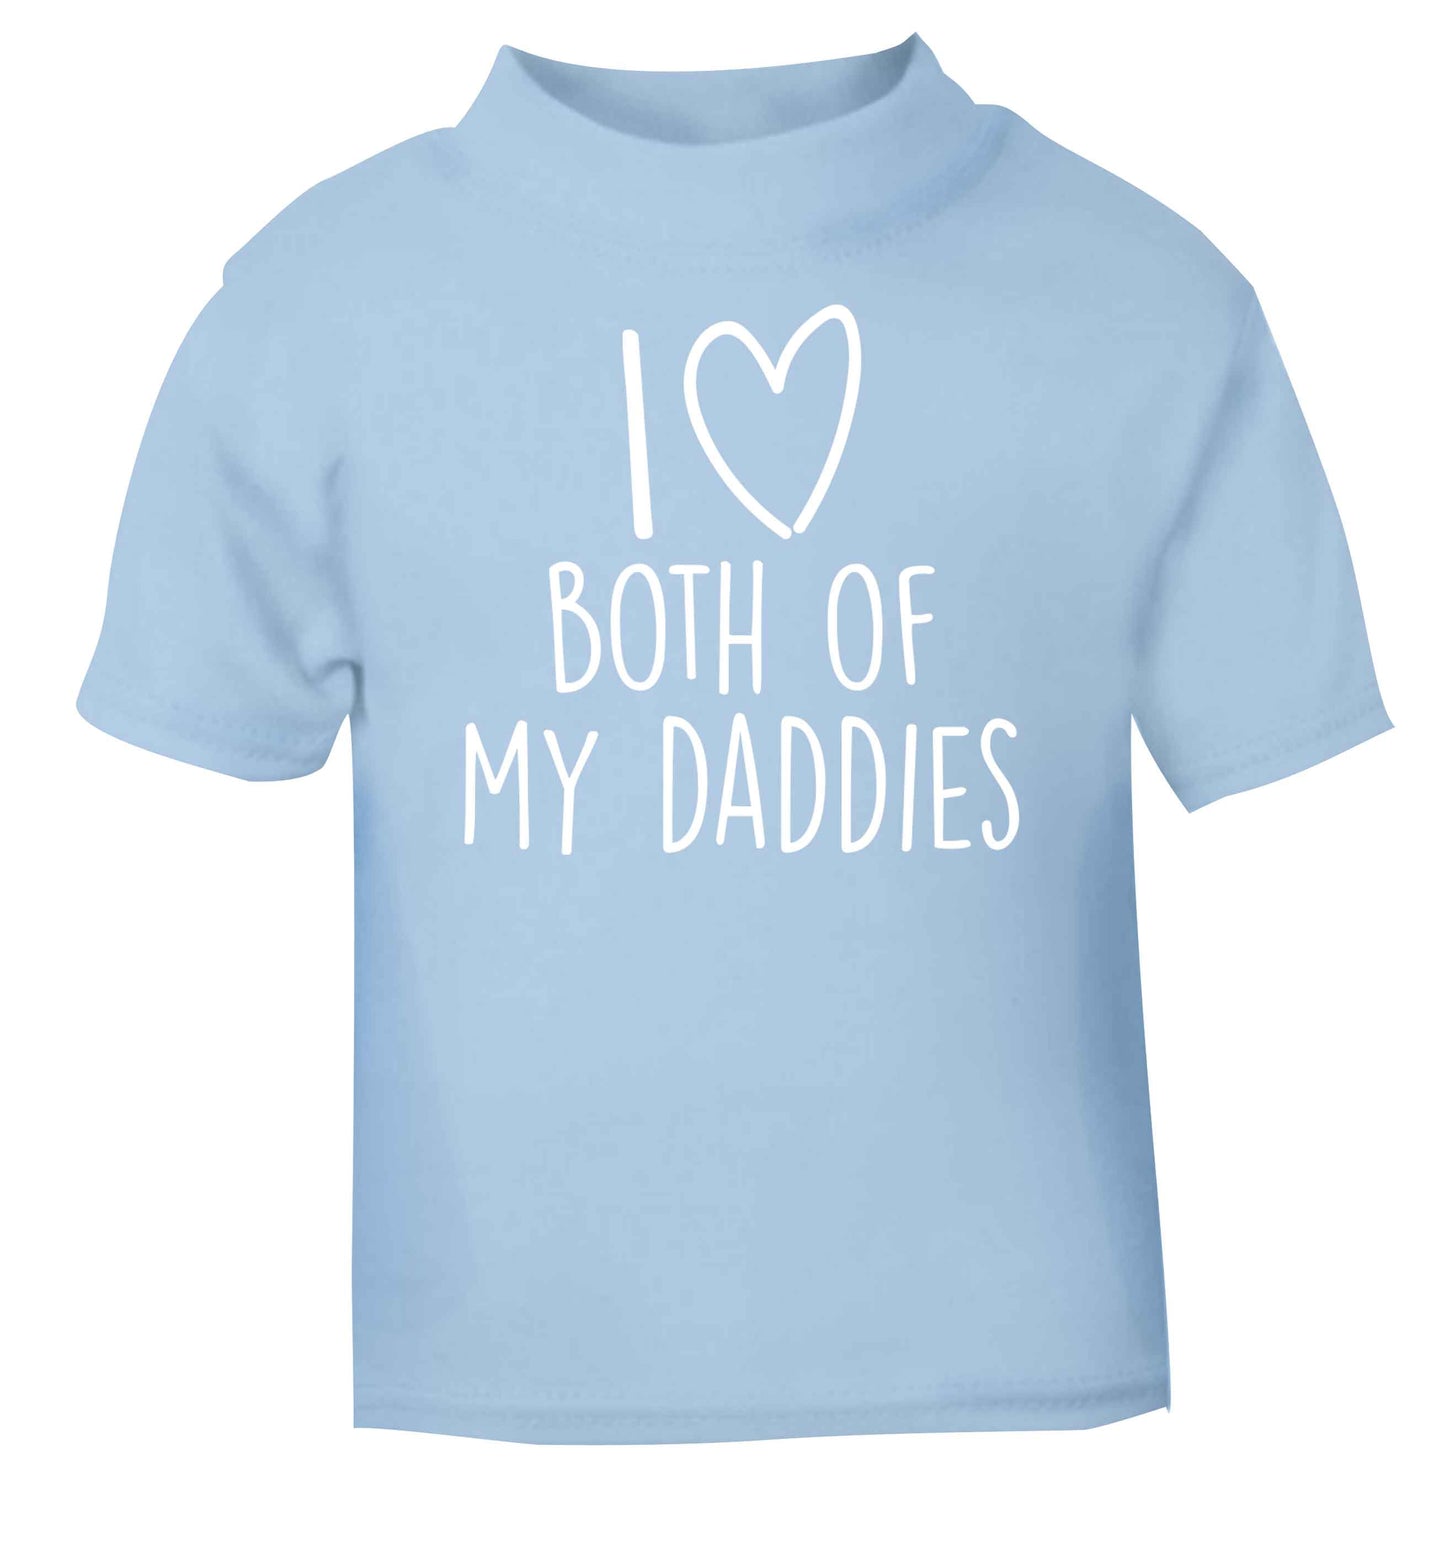 I love both of my daddies light blue baby toddler Tshirt 2 Years